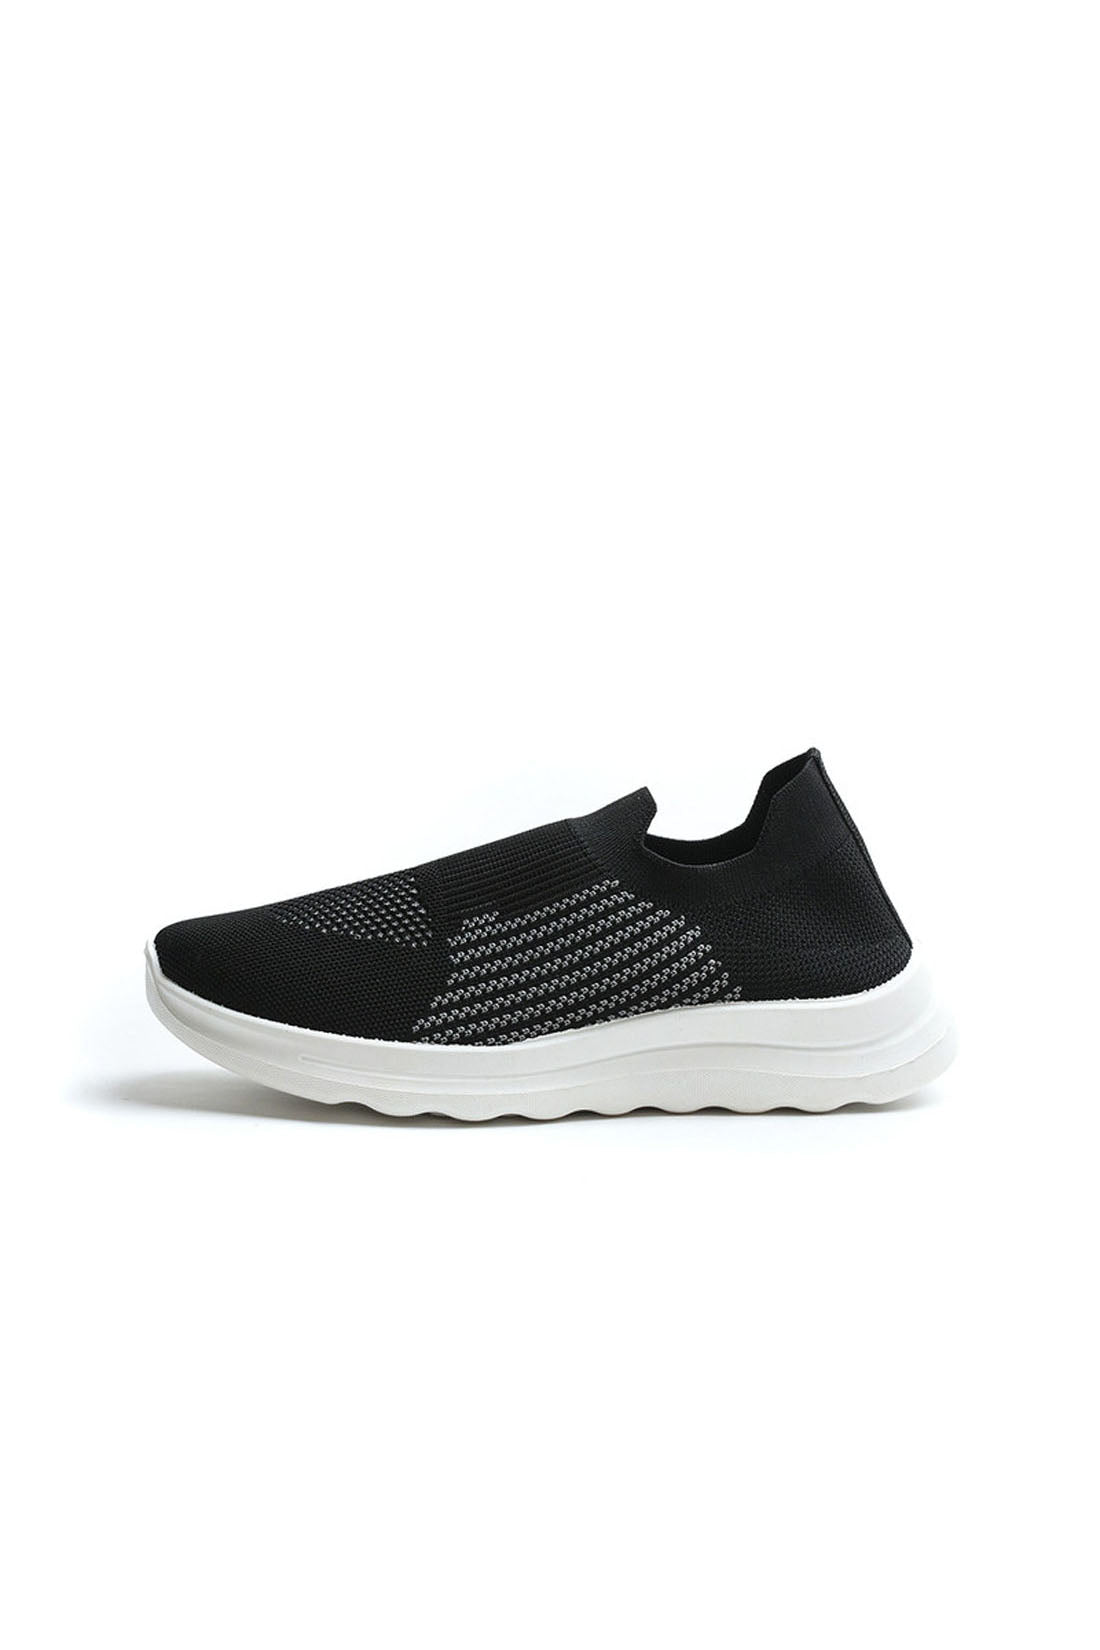 Knit Sneakers - Sportive Canvas Sock - Slip-On - Black & White